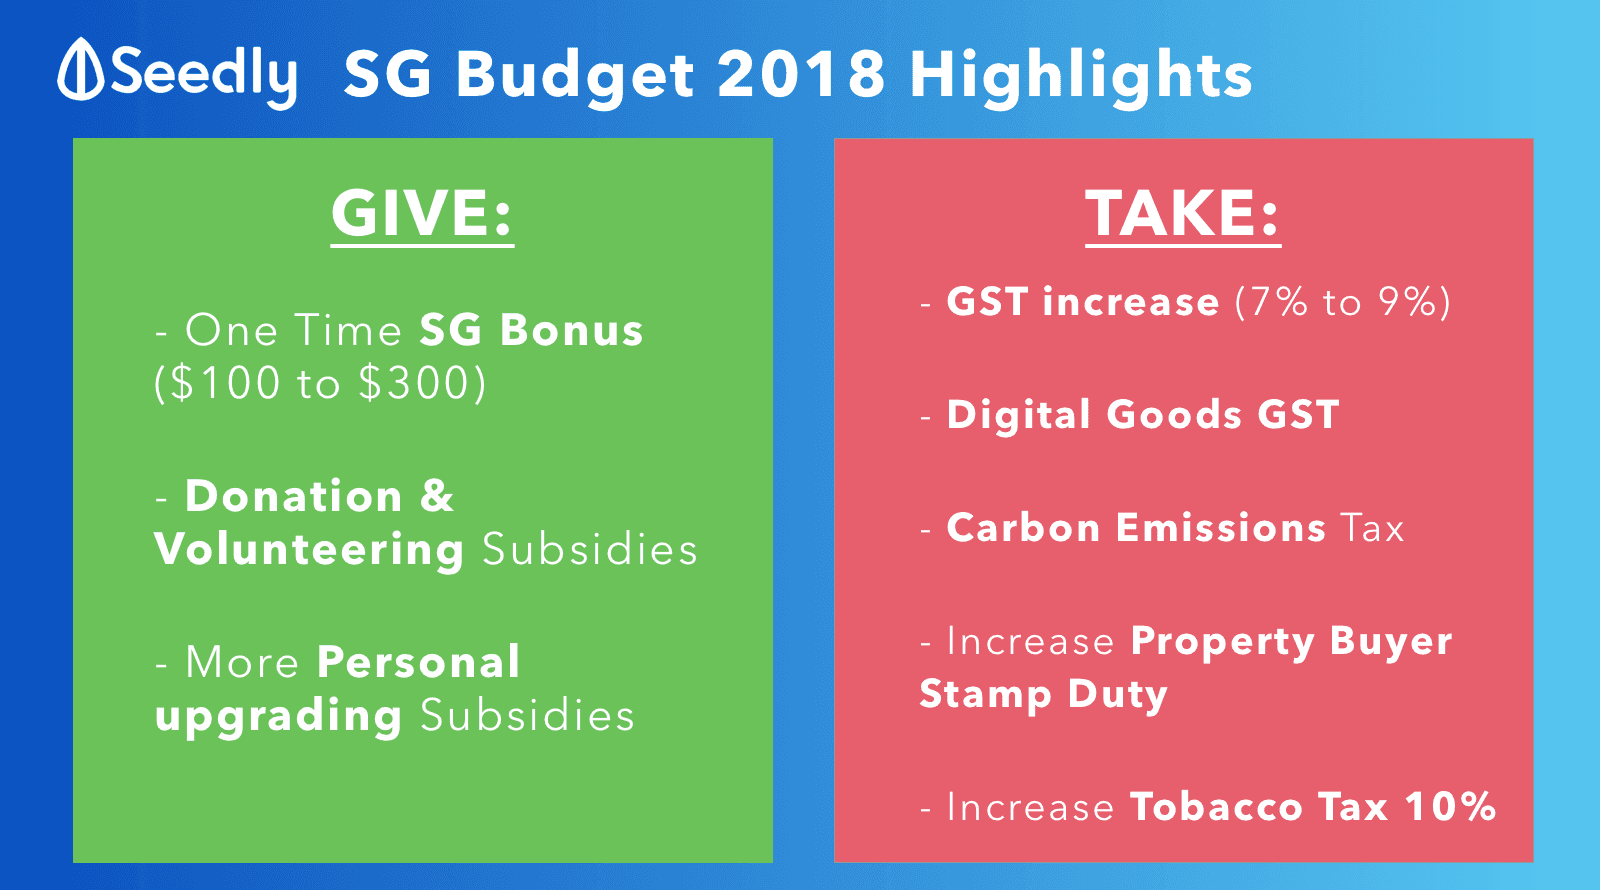 Budget 2018 highlights